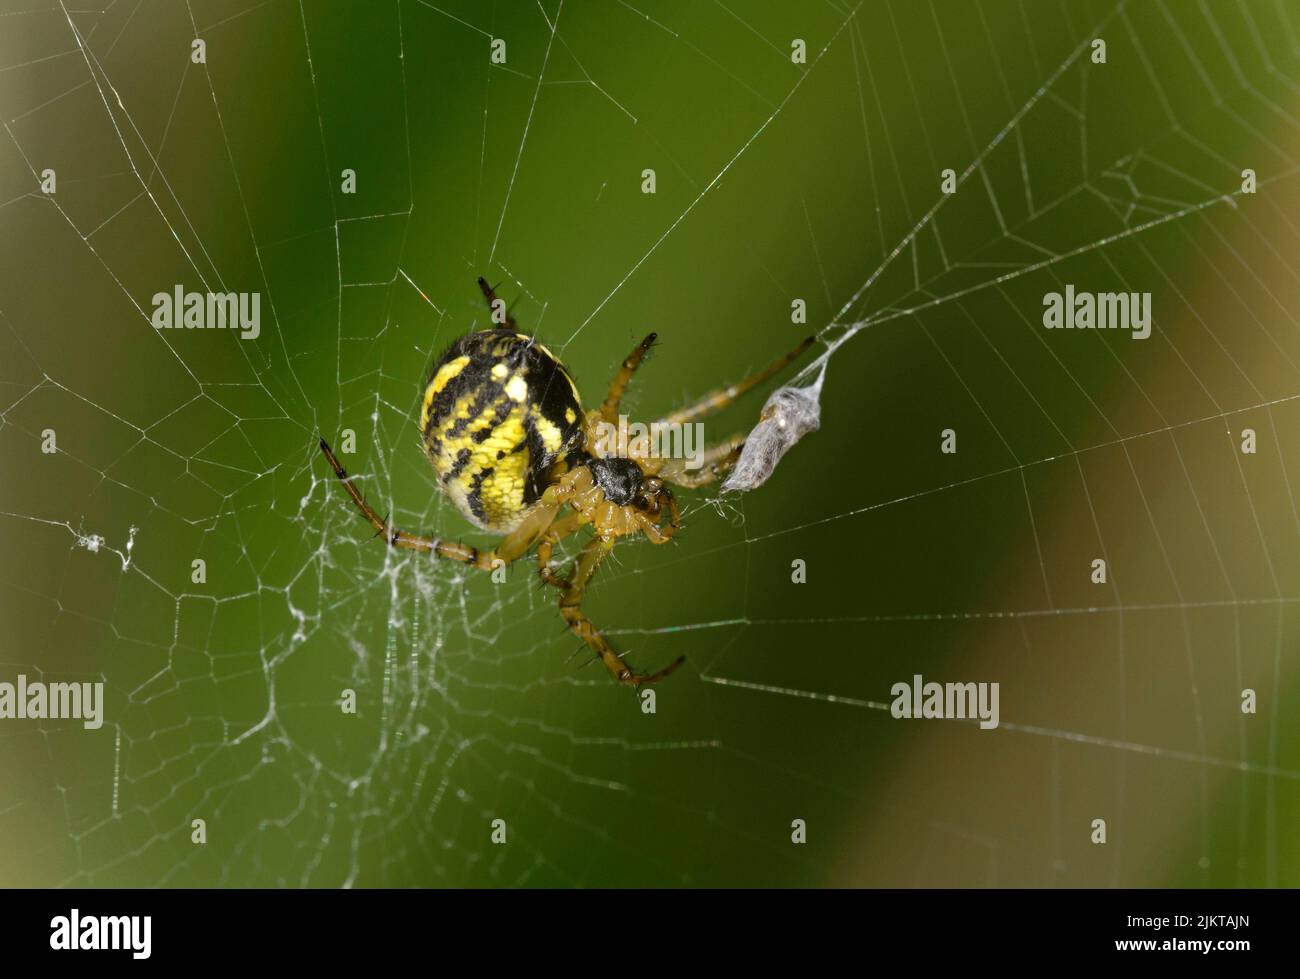 Femmina Sheetweaver Spider Linyphia triangularis dopo aver catturato una preda, Vallese, Svizzera Foto Stock